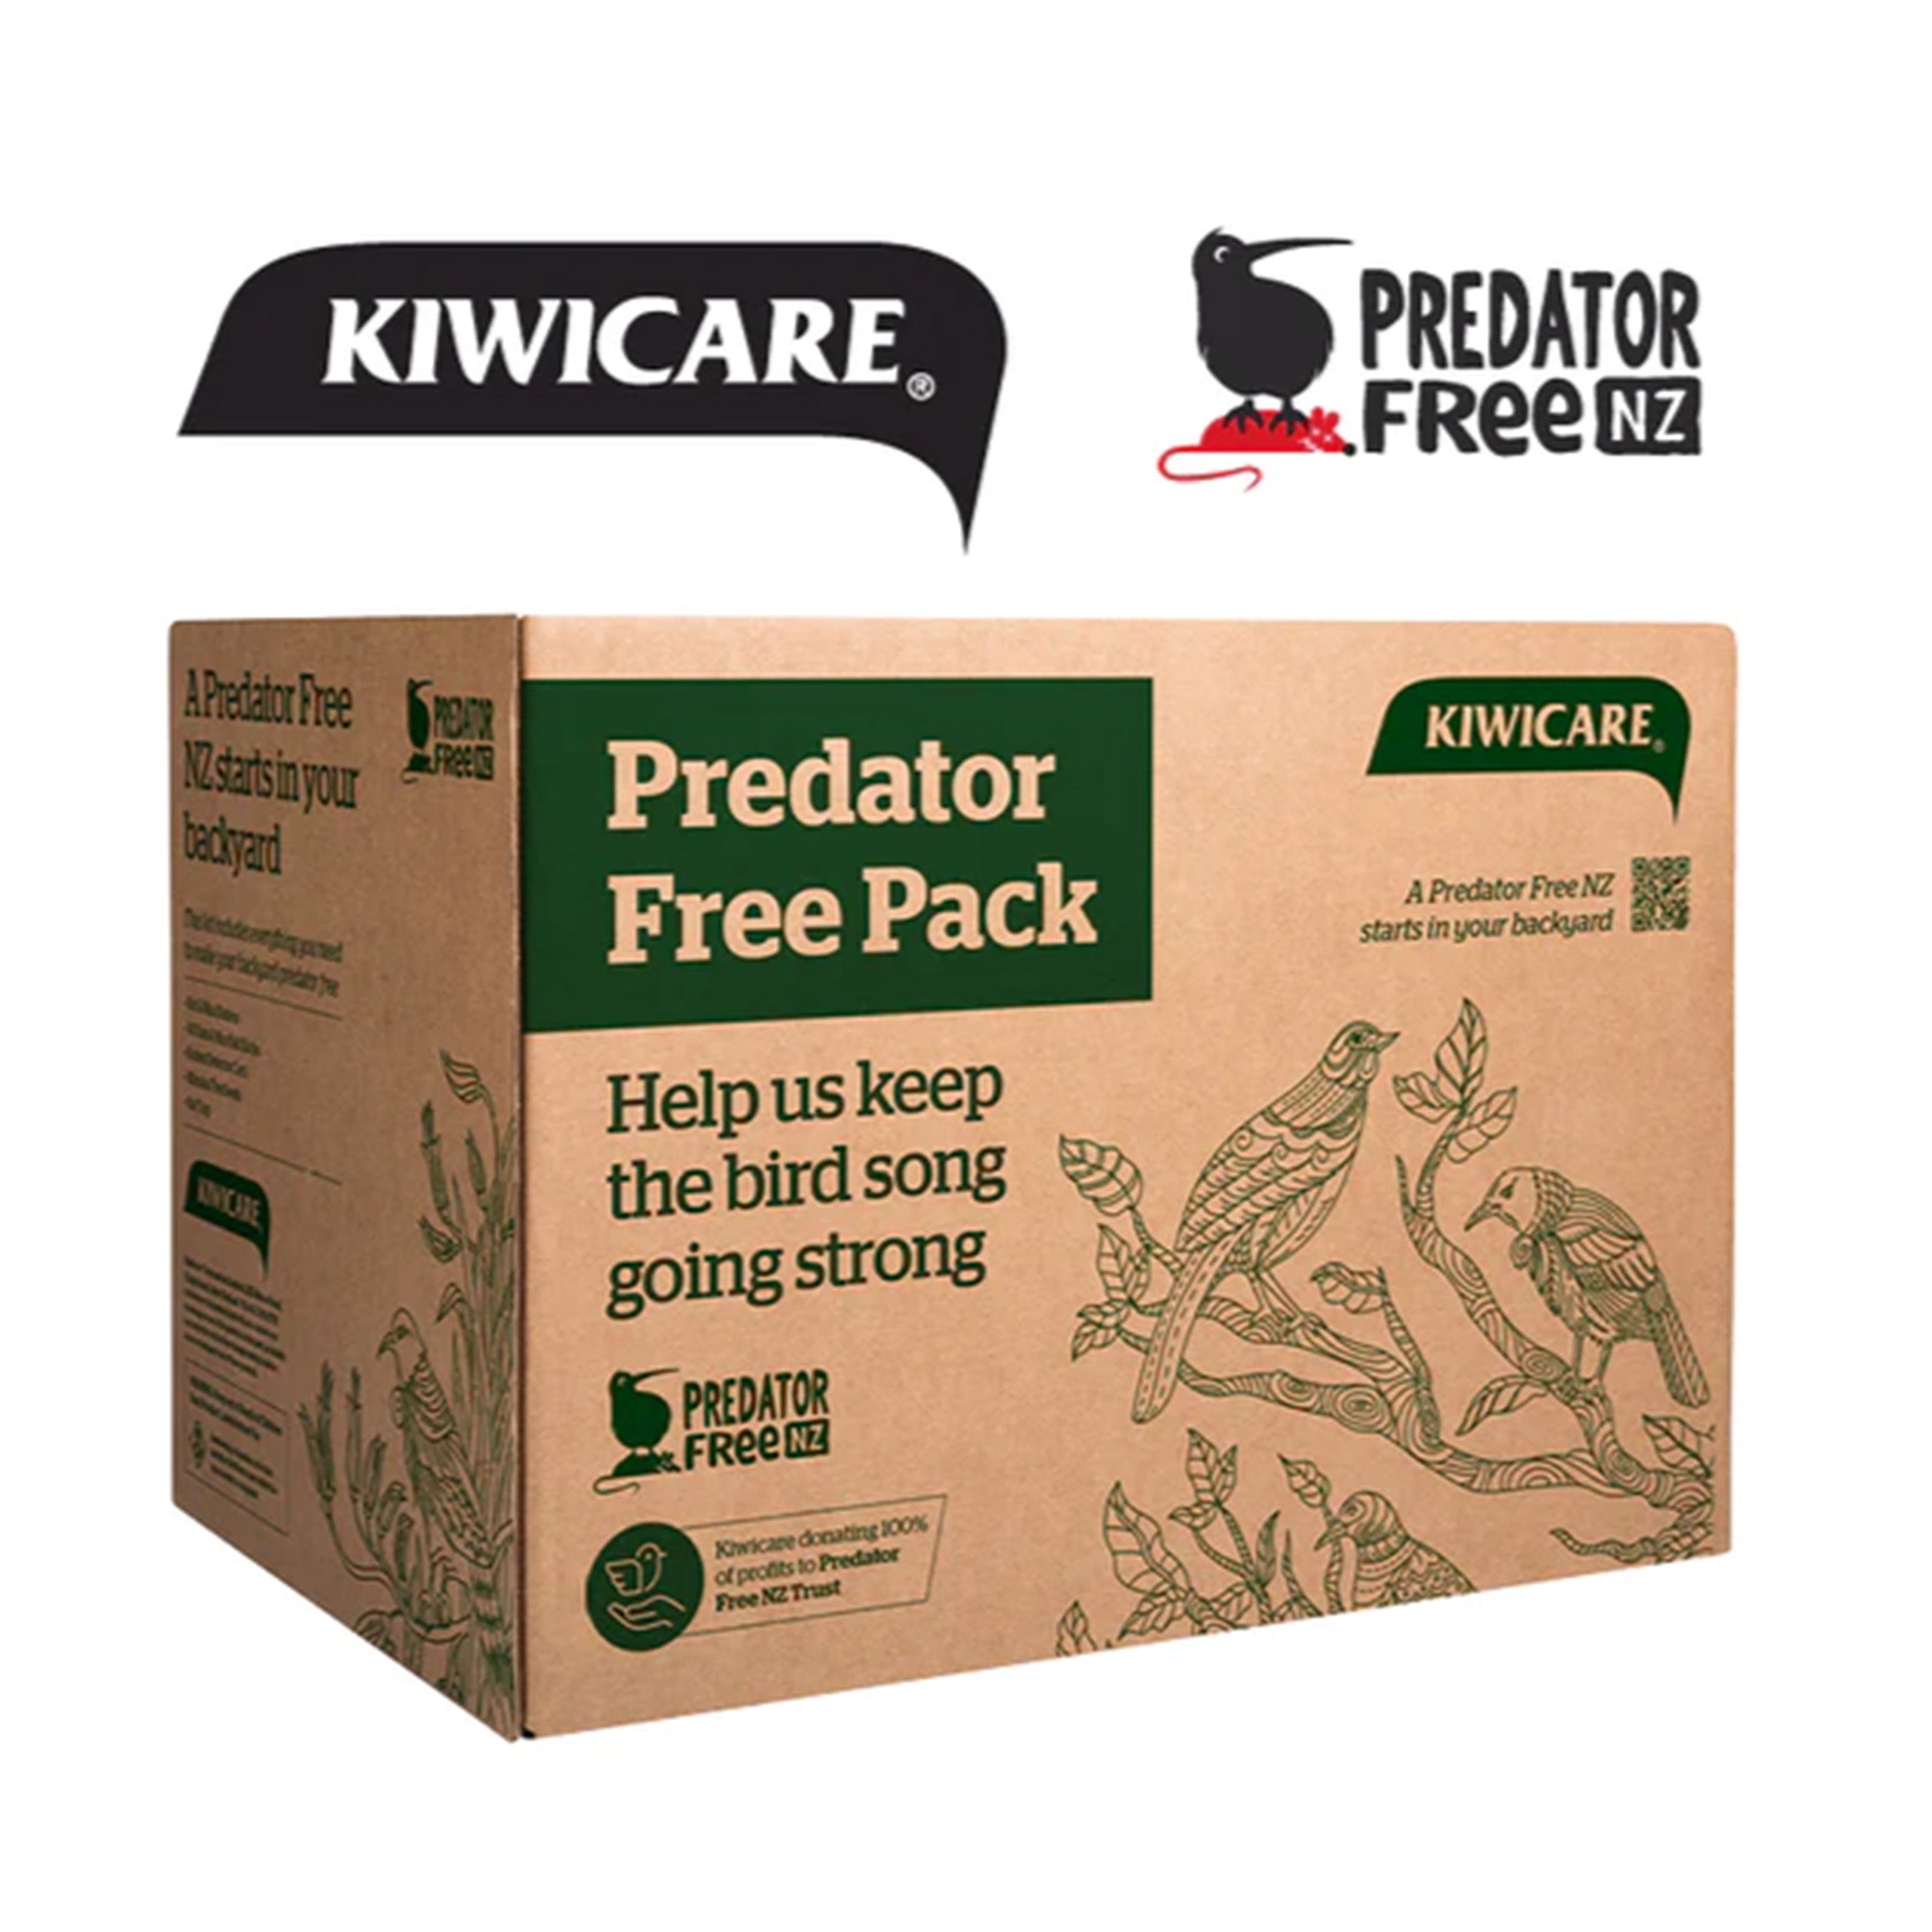 Kiwicare Predator Free Kit